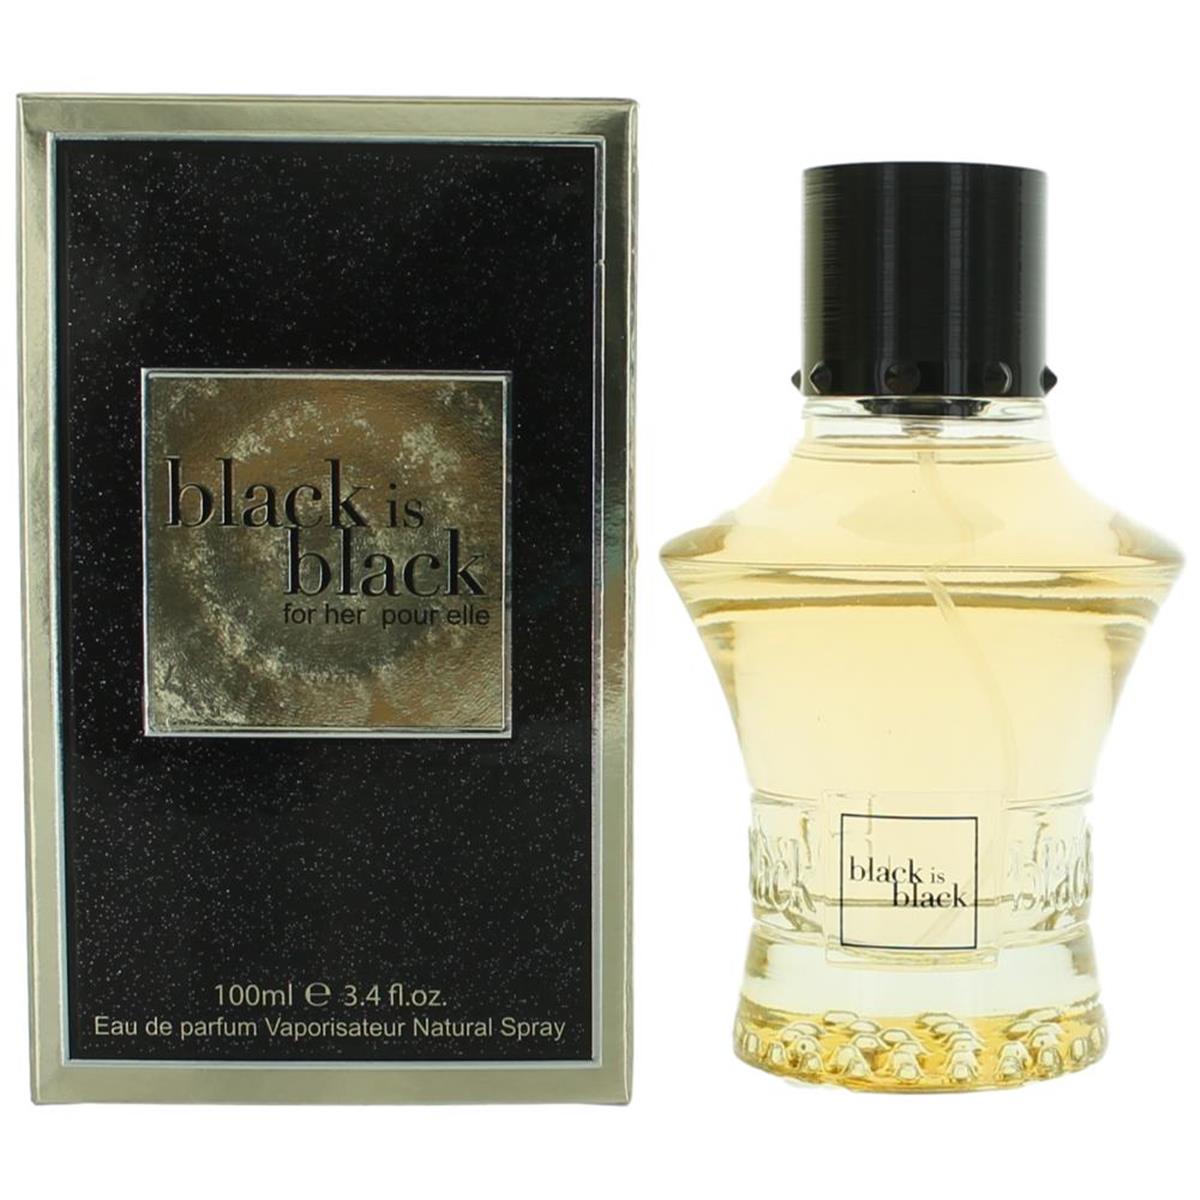 Shop Nuparfums Awbibh33sp 3.4 oz Black Is Black For Her Eau De Parfum Spray For Unisex